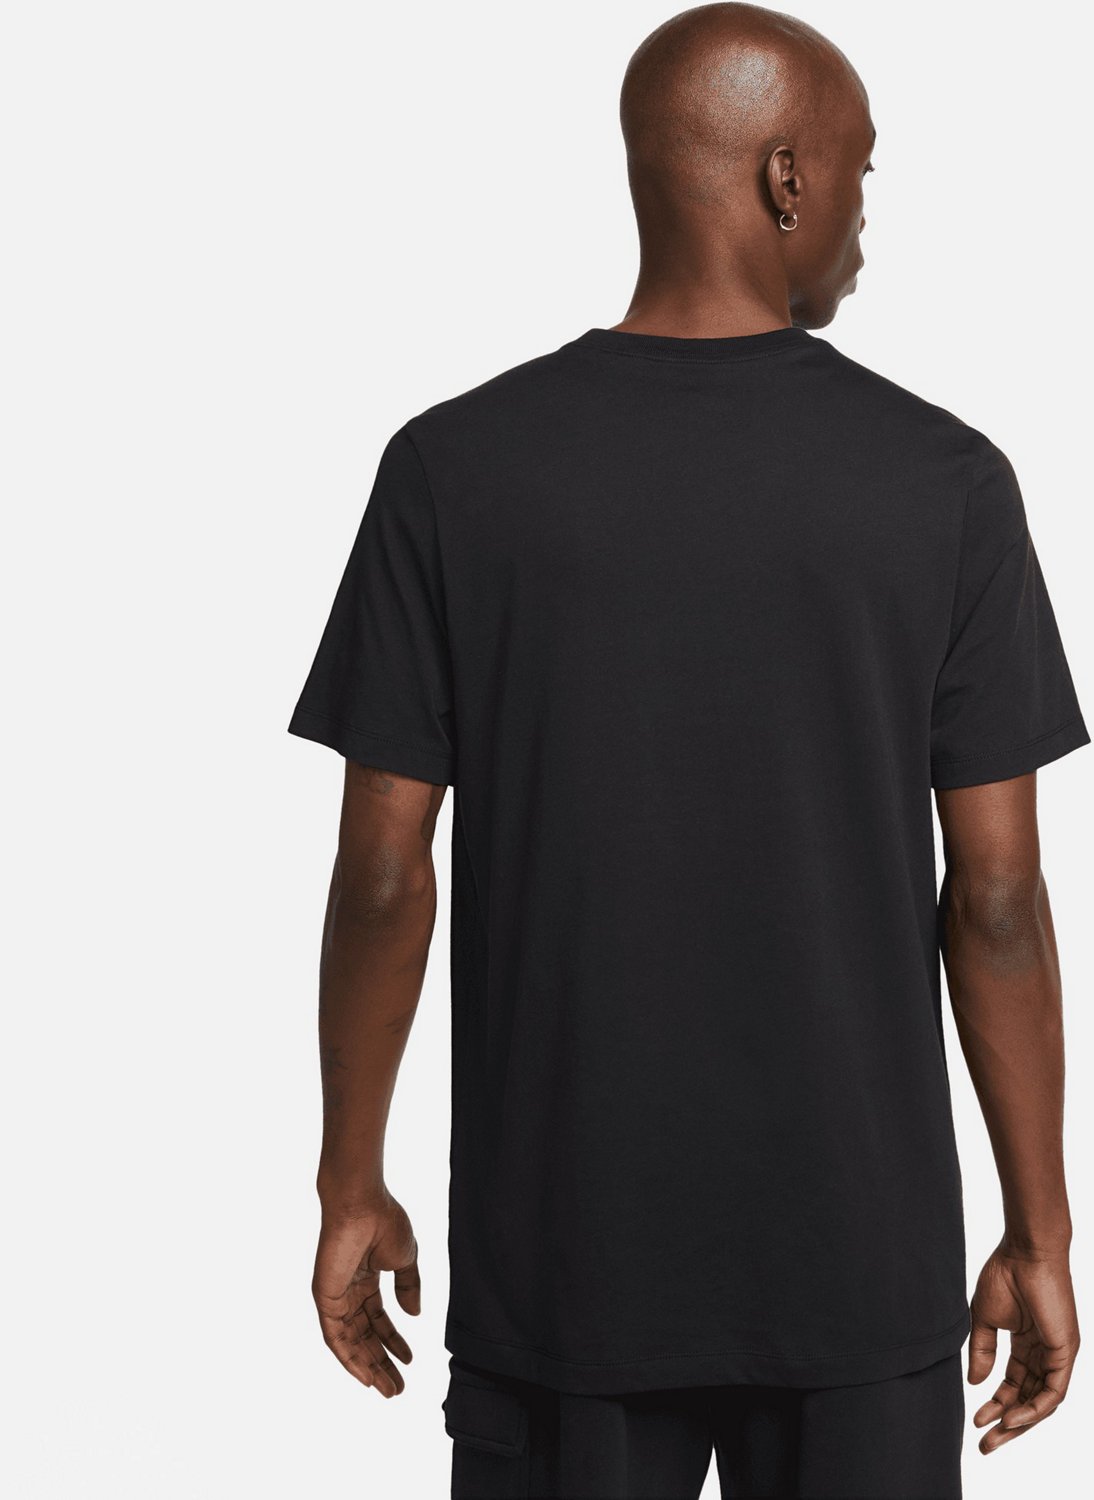 Nike Men\'s Swoosh T-shirt | Free at Shipping Academy